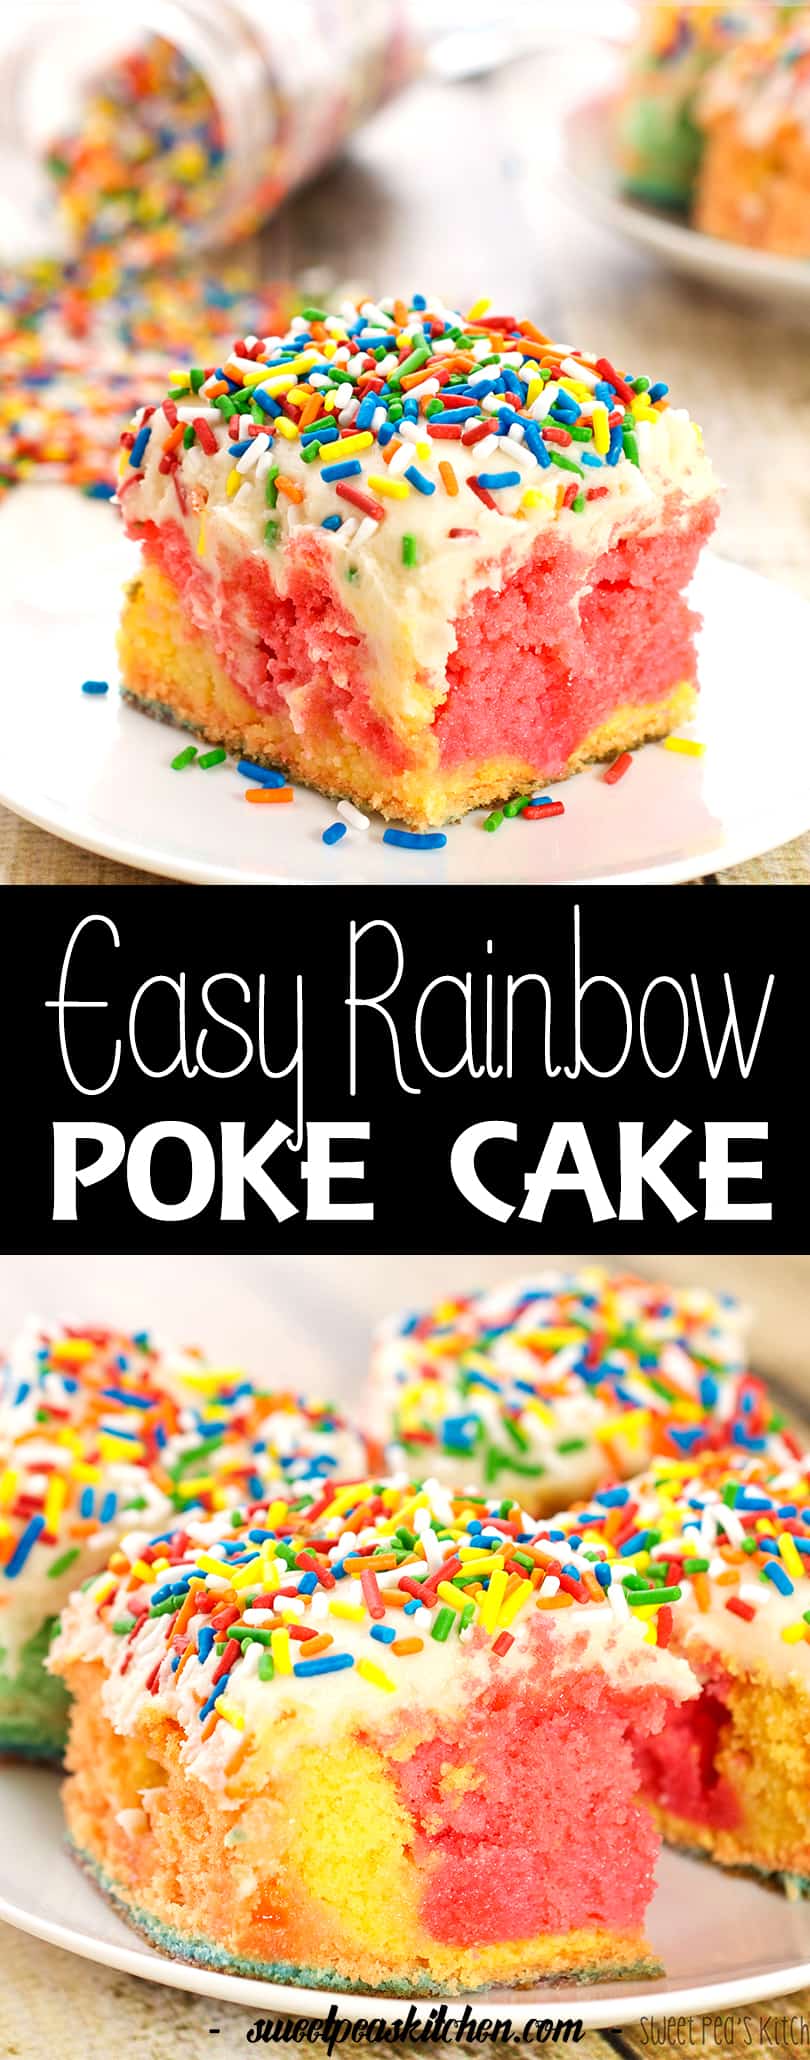 easy rainbow poke cake recipe